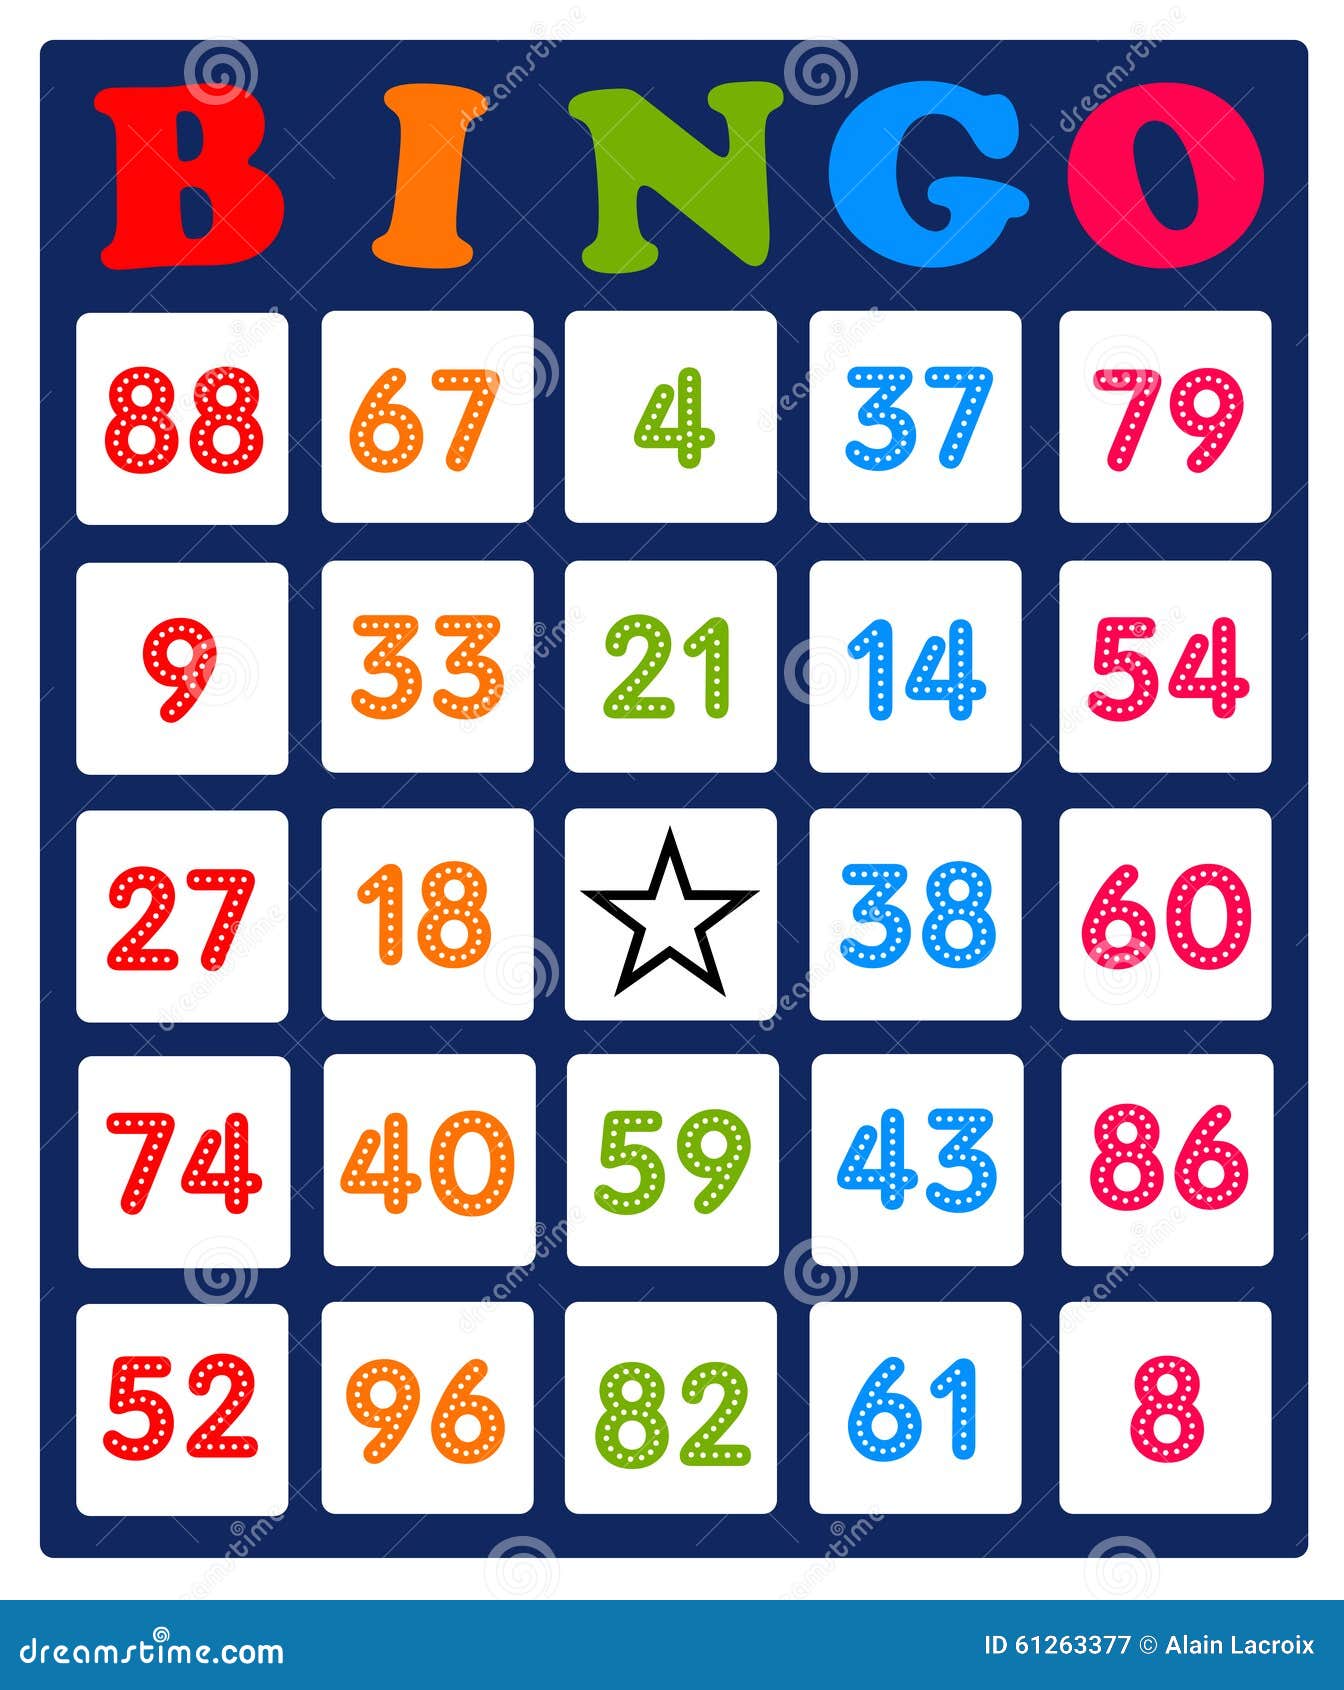 bingo-card-online-bingo